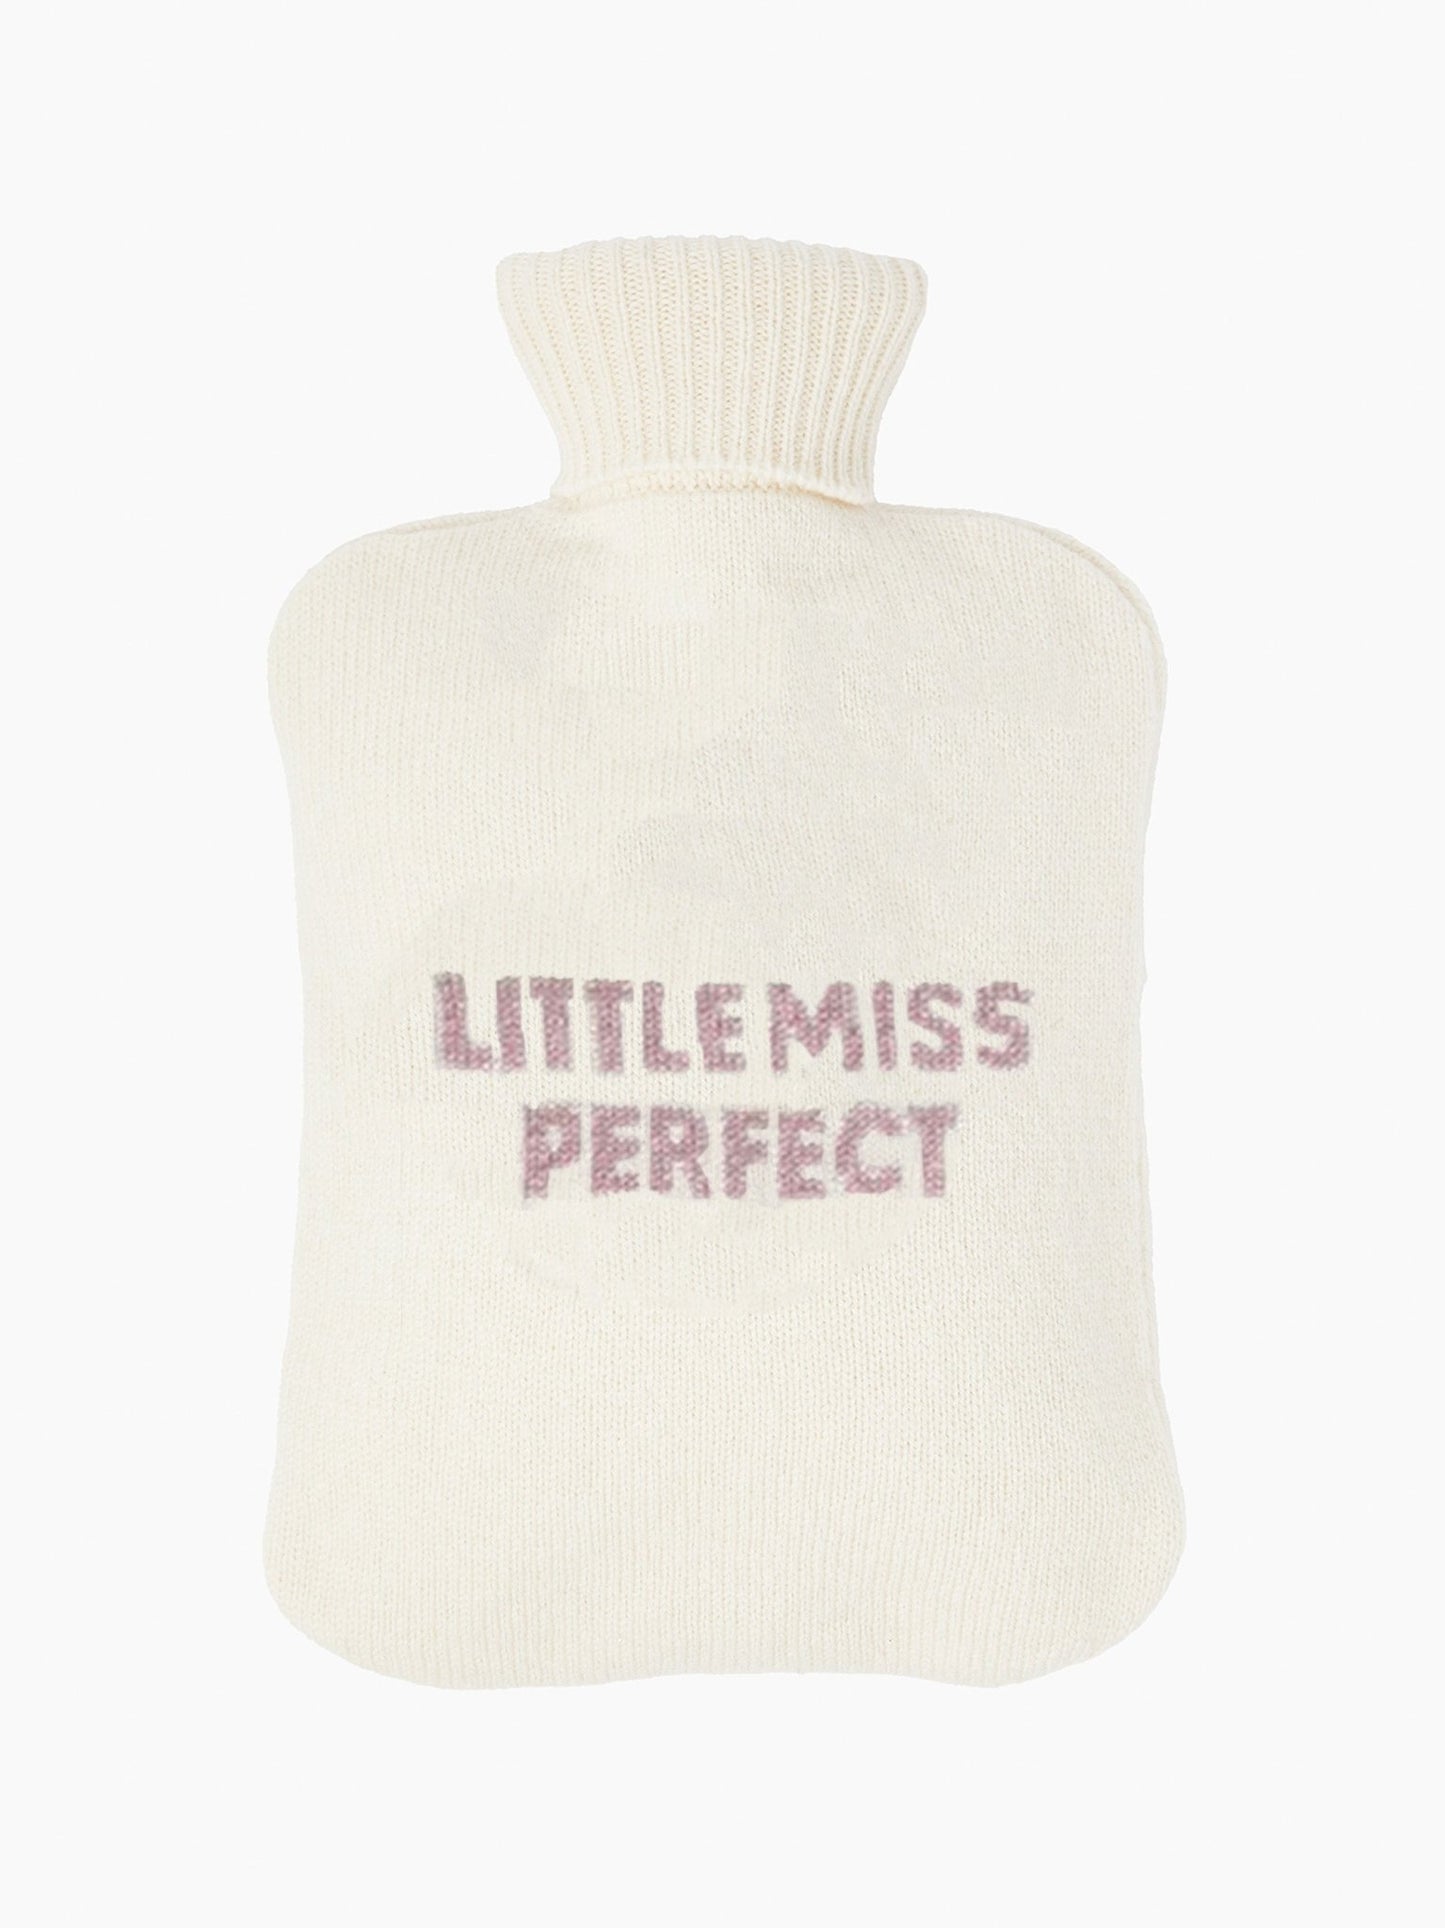 Hot Water Bottle - Little Miss Perfect